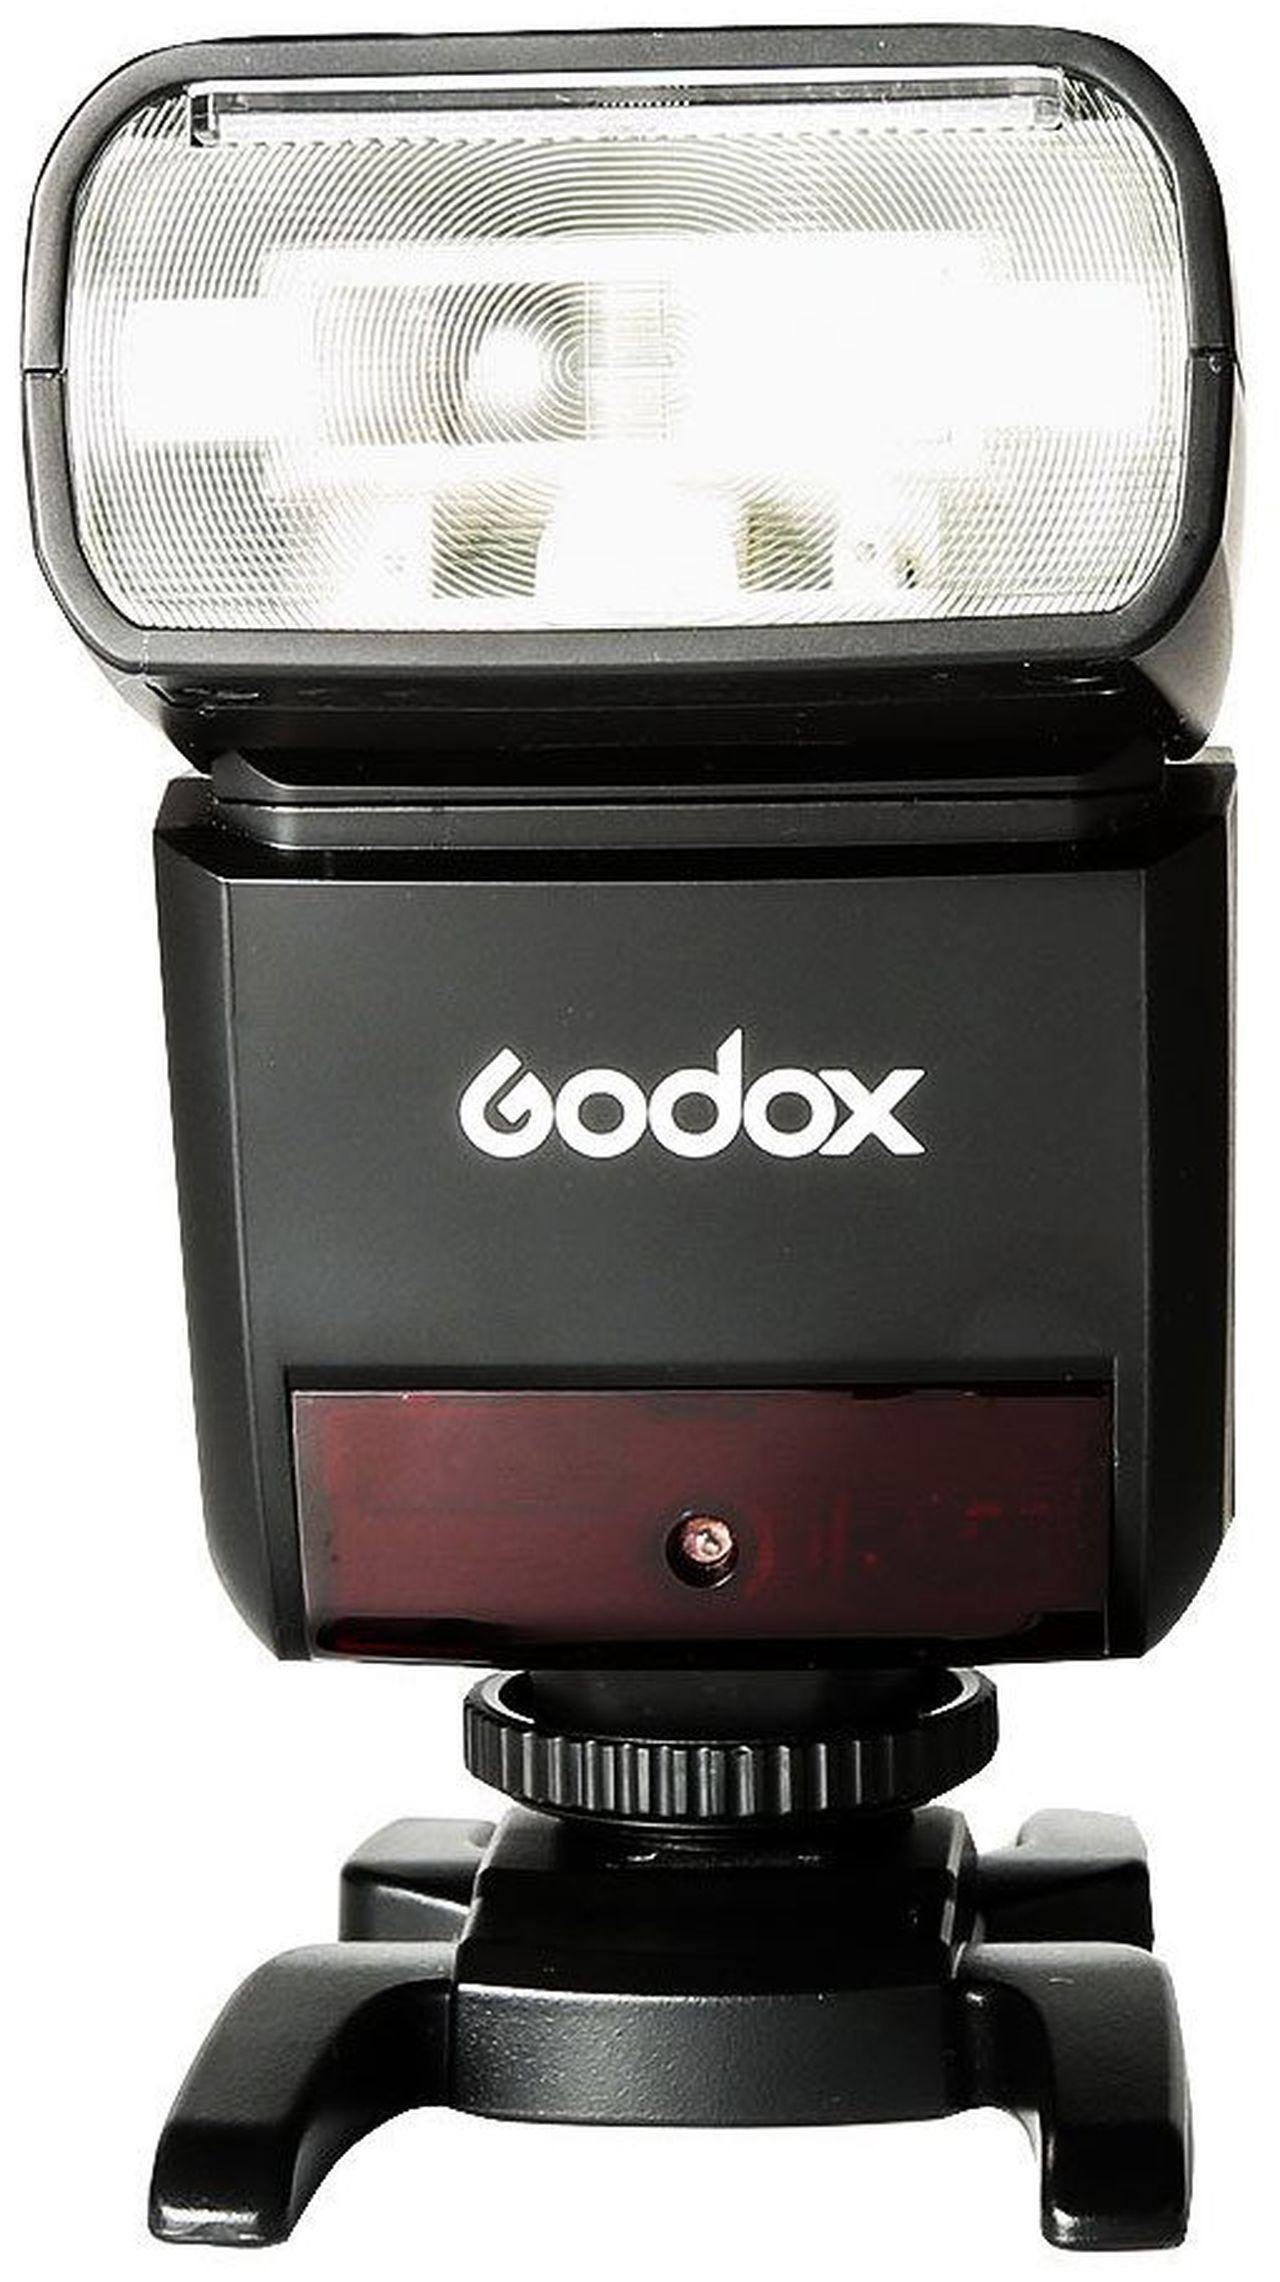 Nikon Objektiv TT350 Godox Blitzgerät für